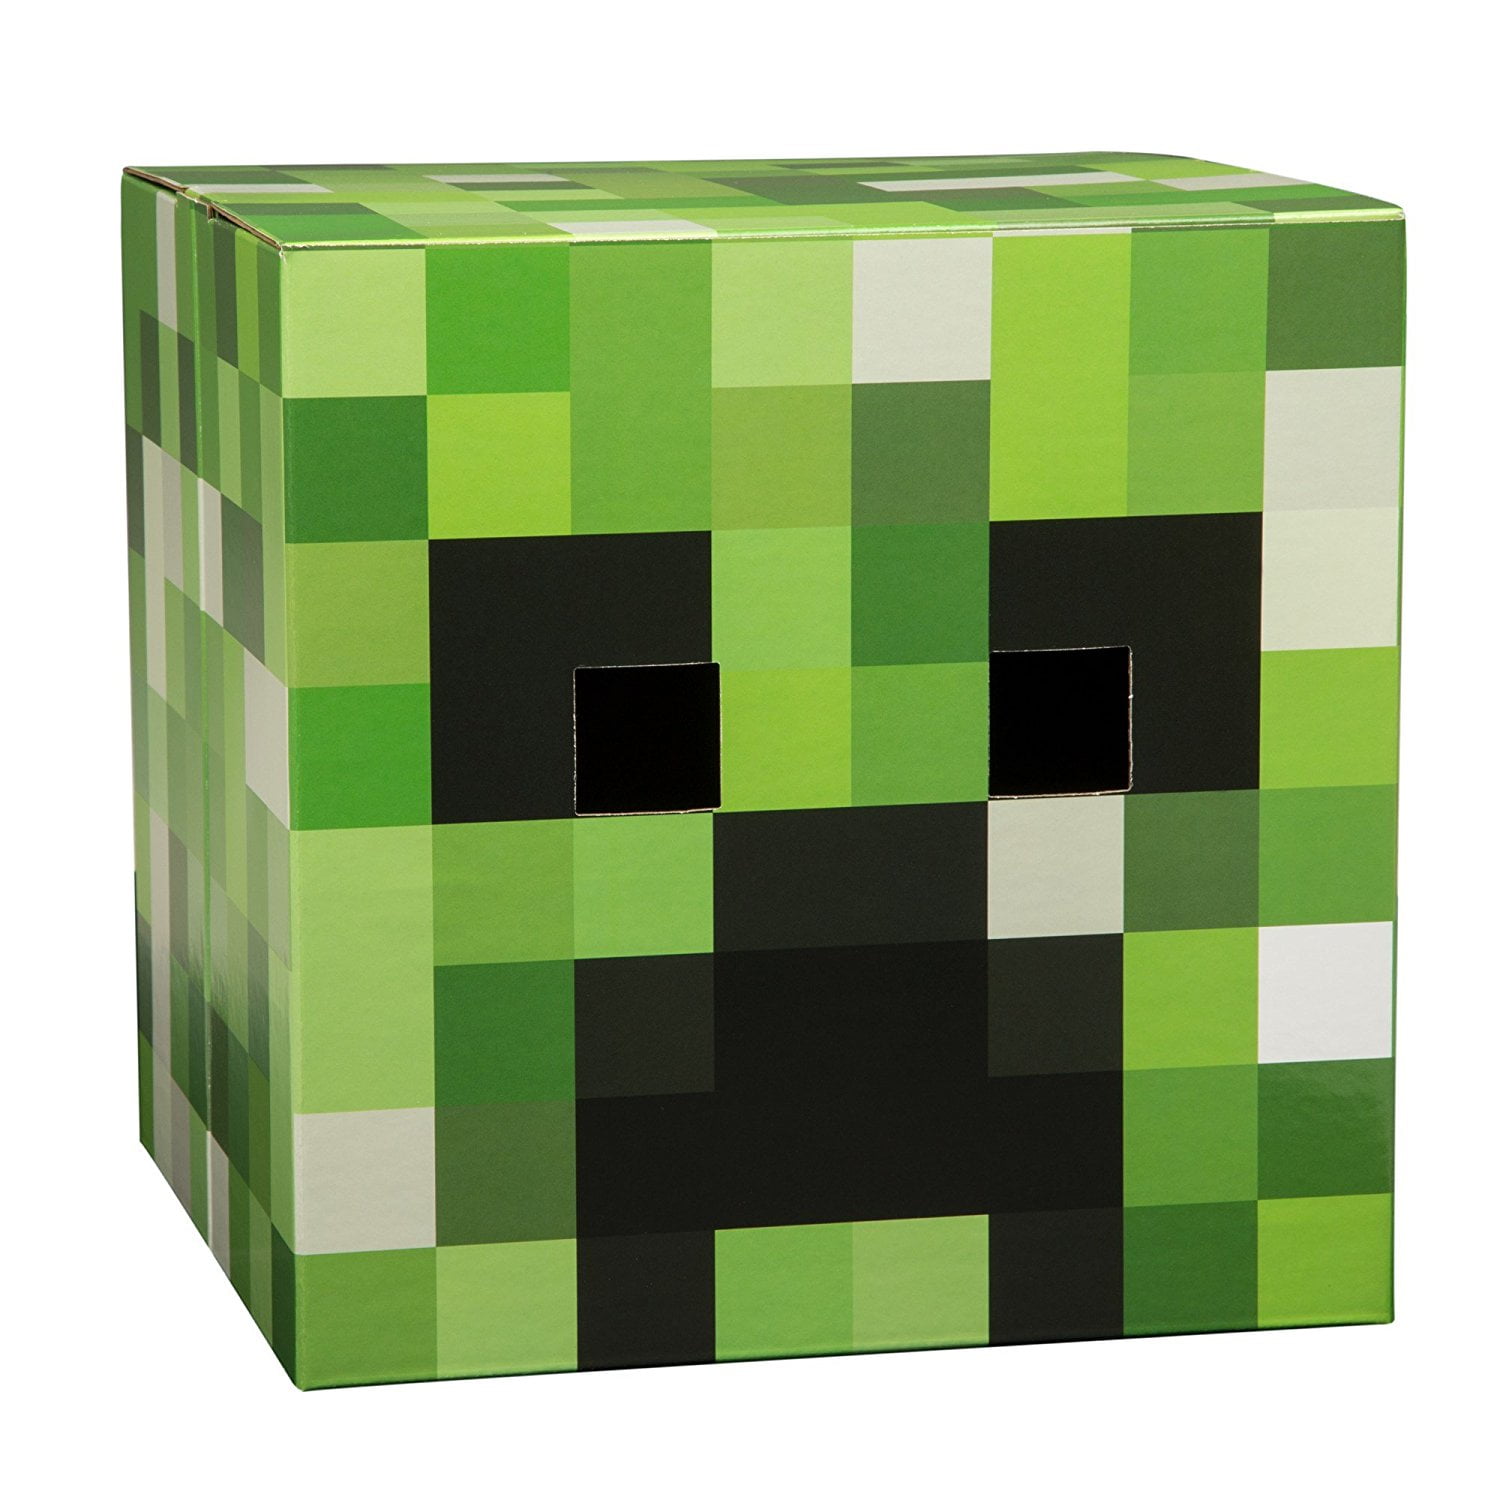 Minecraft Creeper Head Premium Costume Mask - Walmart.com